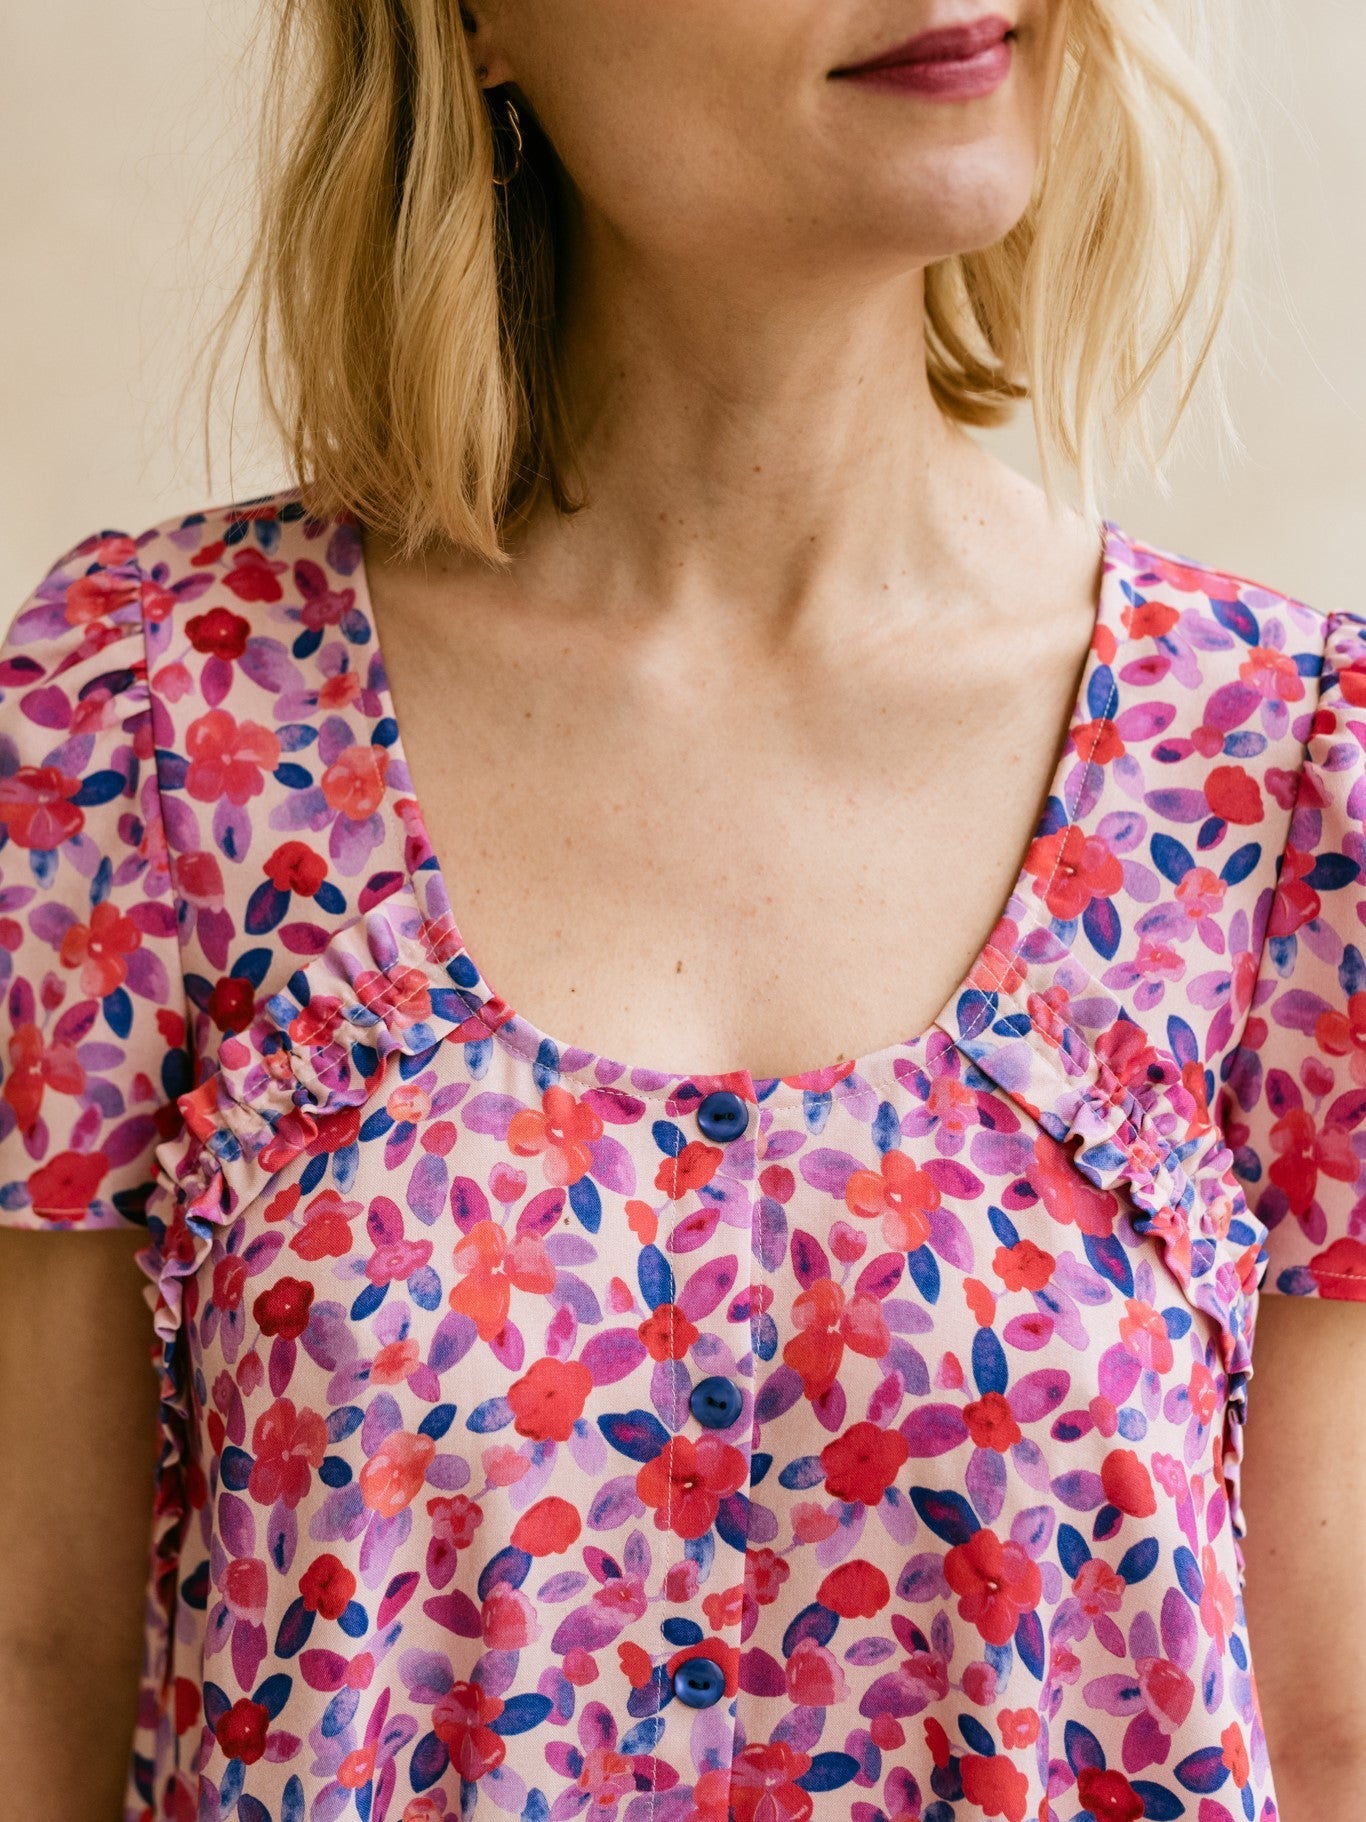 Bloom dress/blouse - pattern Couture PDF or paper - Joli Lab